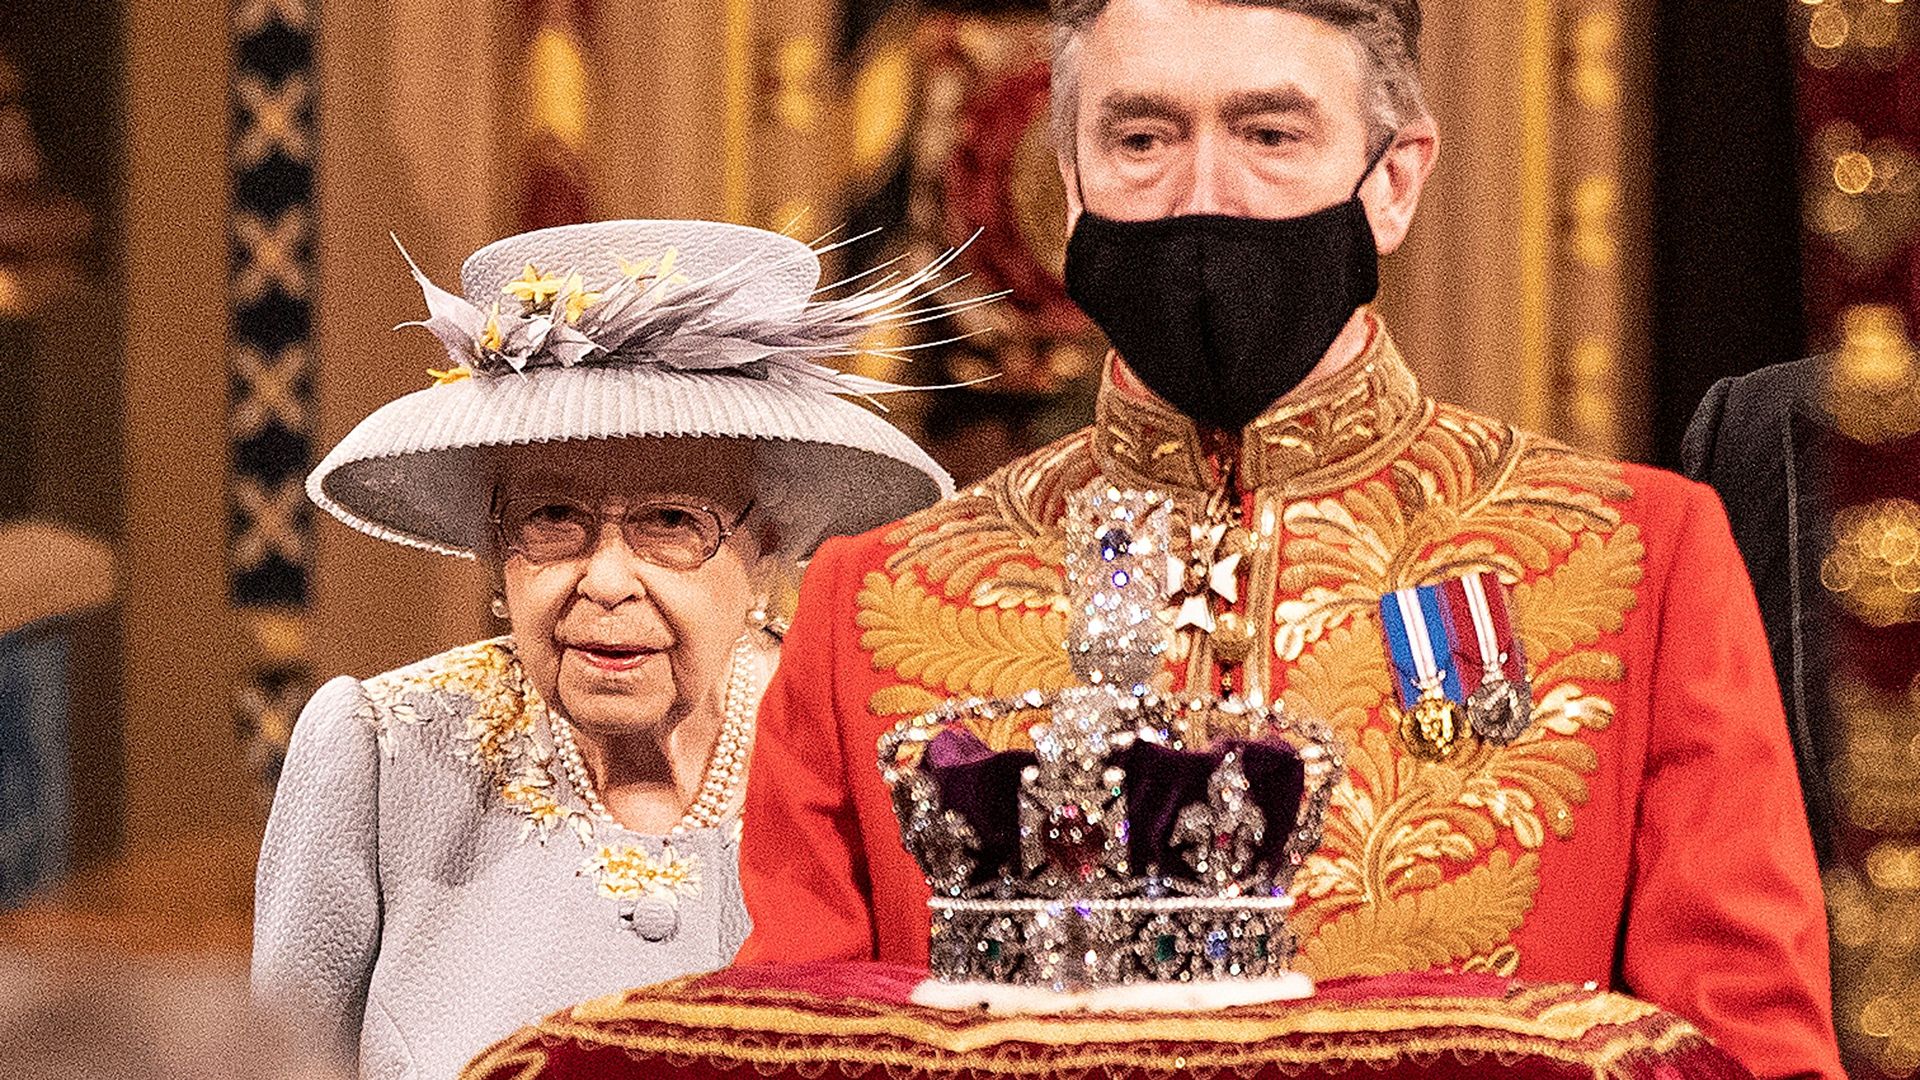 Queen Elizabeth walking behind the crown